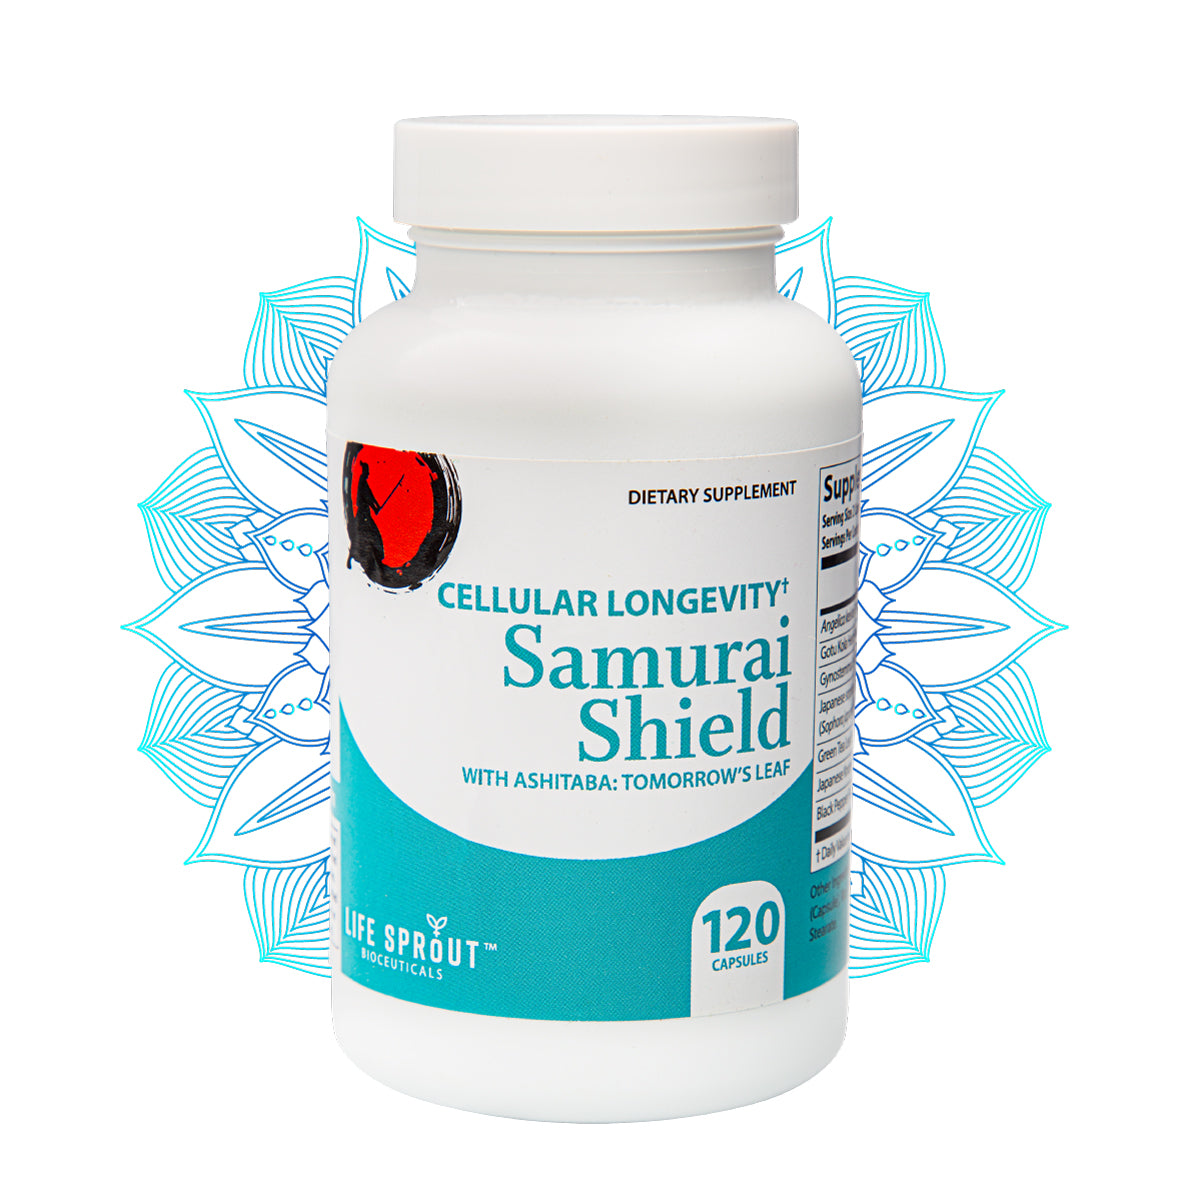 Samurai Shield - Cellular Longevity – with Ashitaba: Tomorrow’s Leaf